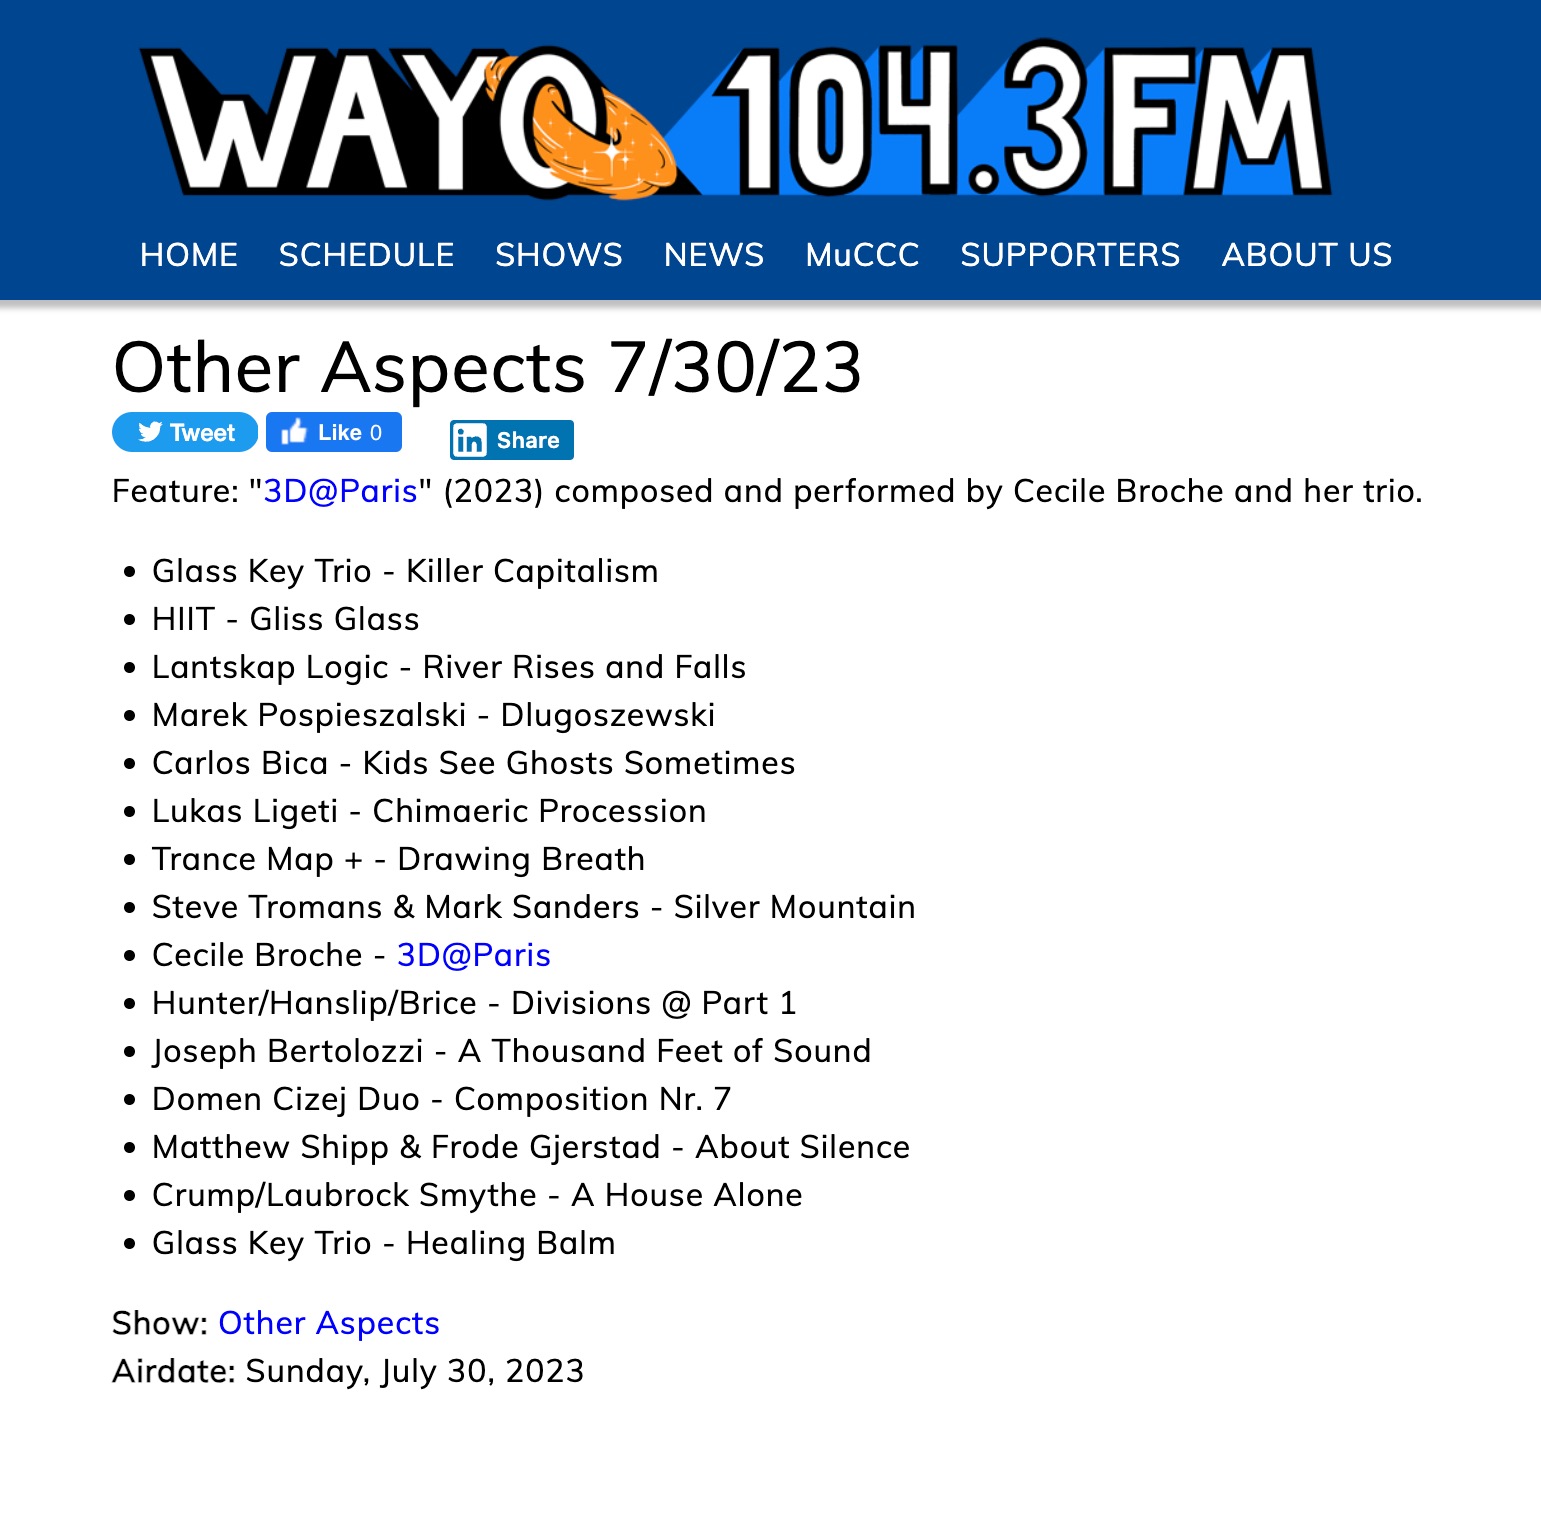 Other Aspects, WAYO 104.3FM, July 30 2023